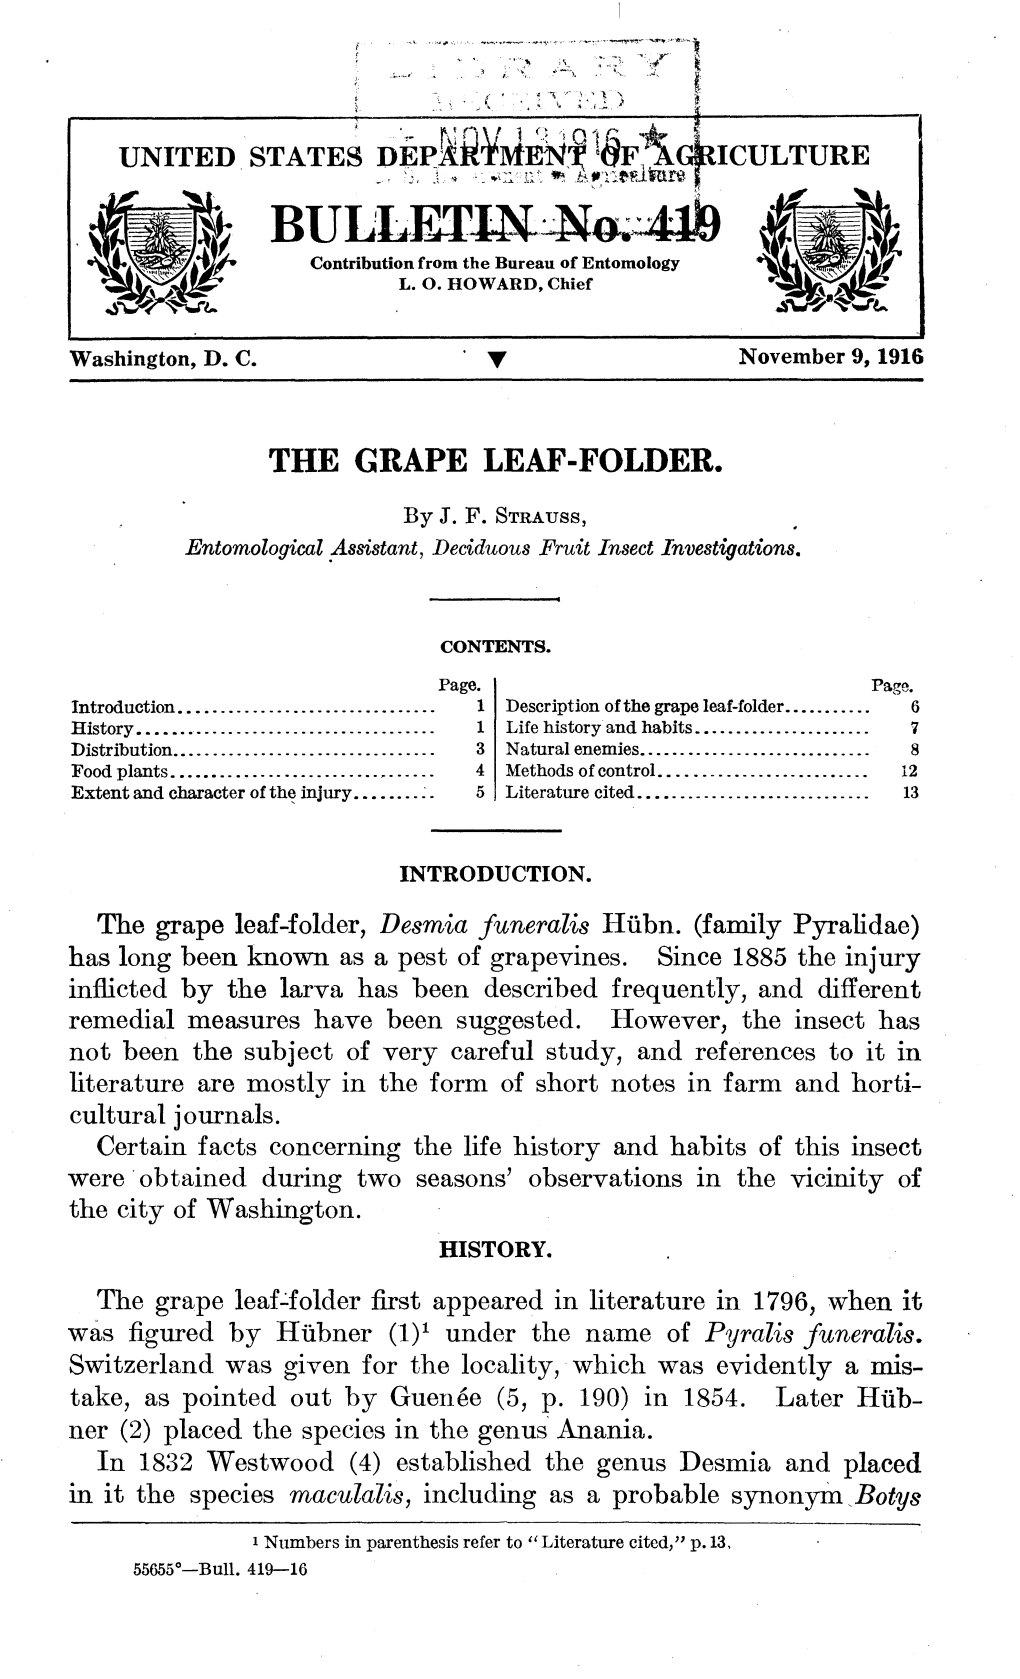 The Grape Leaf-Folder